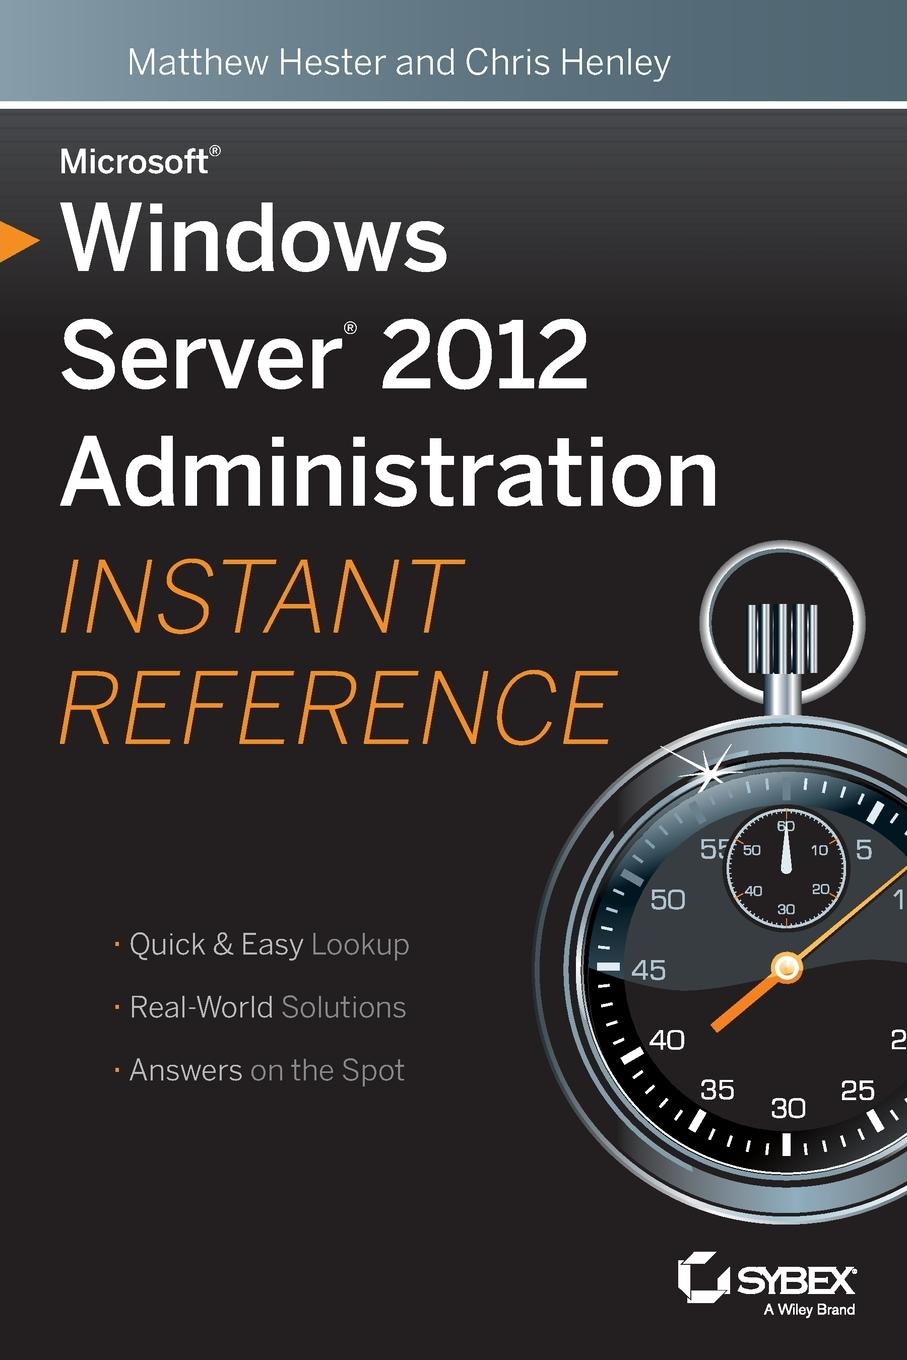 Microsoft Windows Server 2012 Administration Instant Reference - Matthew Hester|Chris Henley